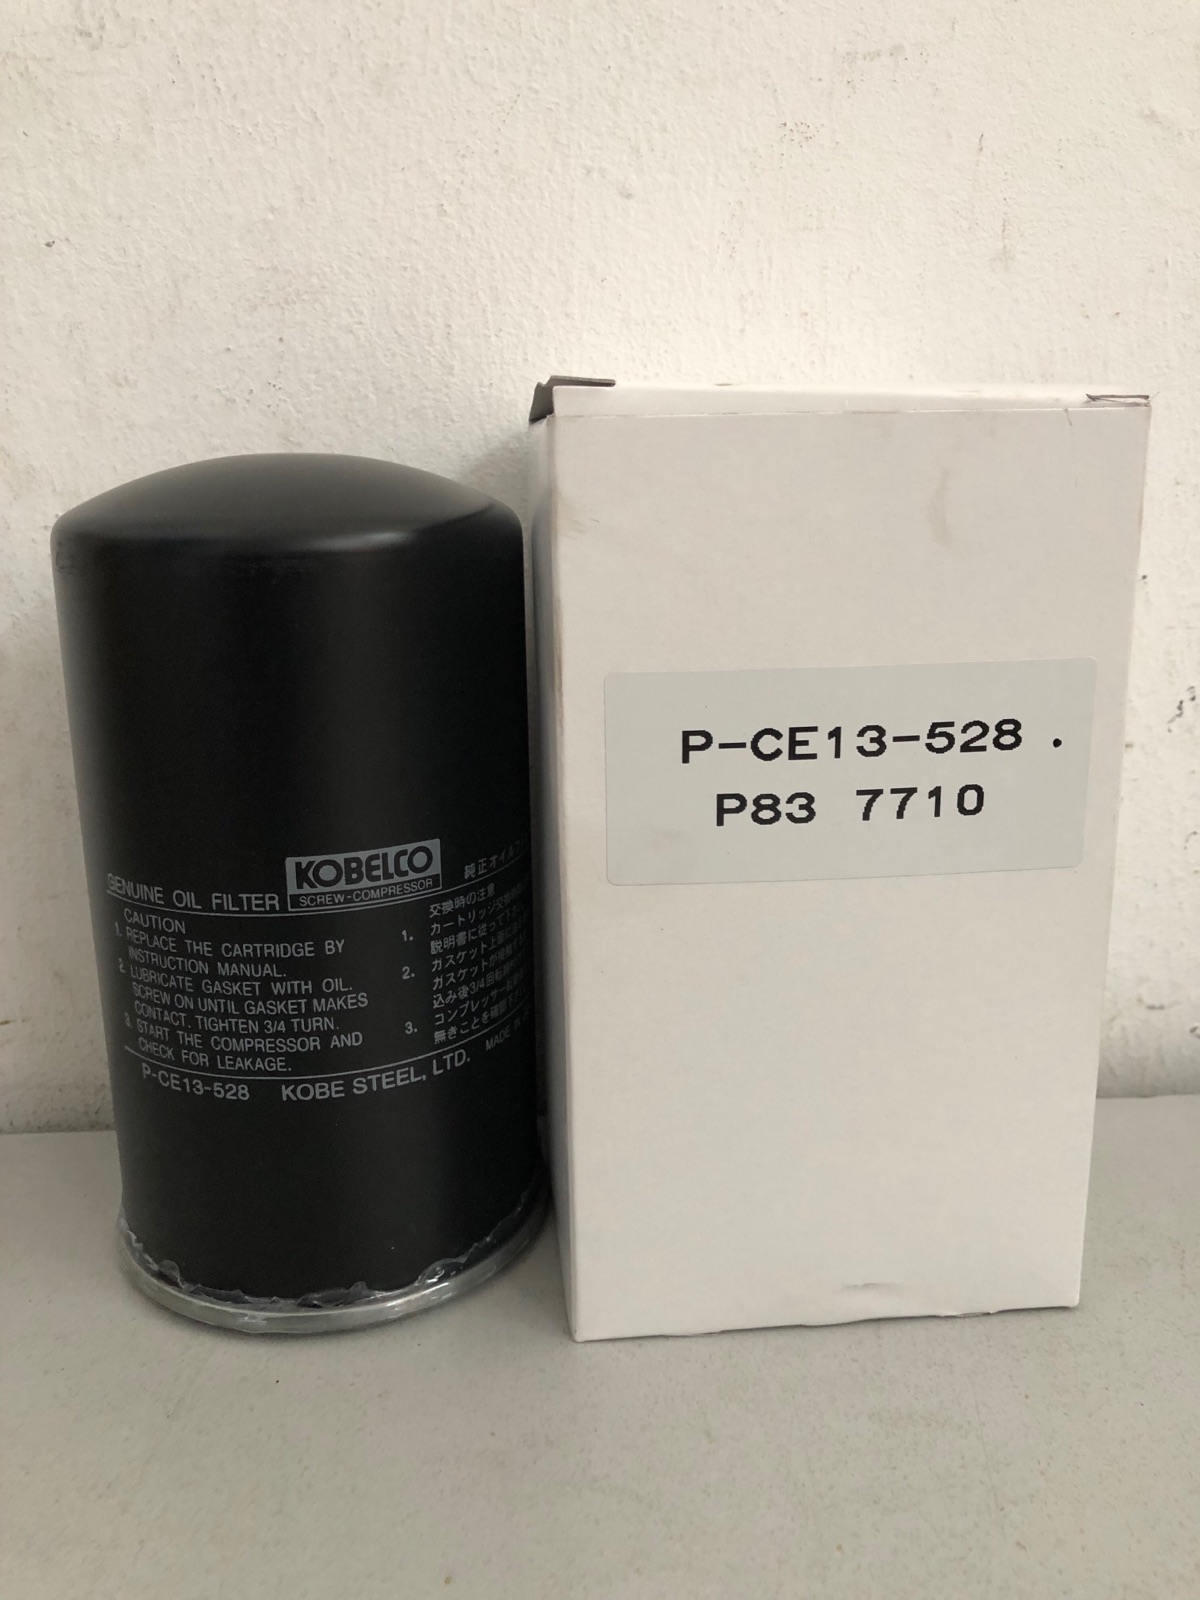 Kobelco Oil Filter P-CE13-528 